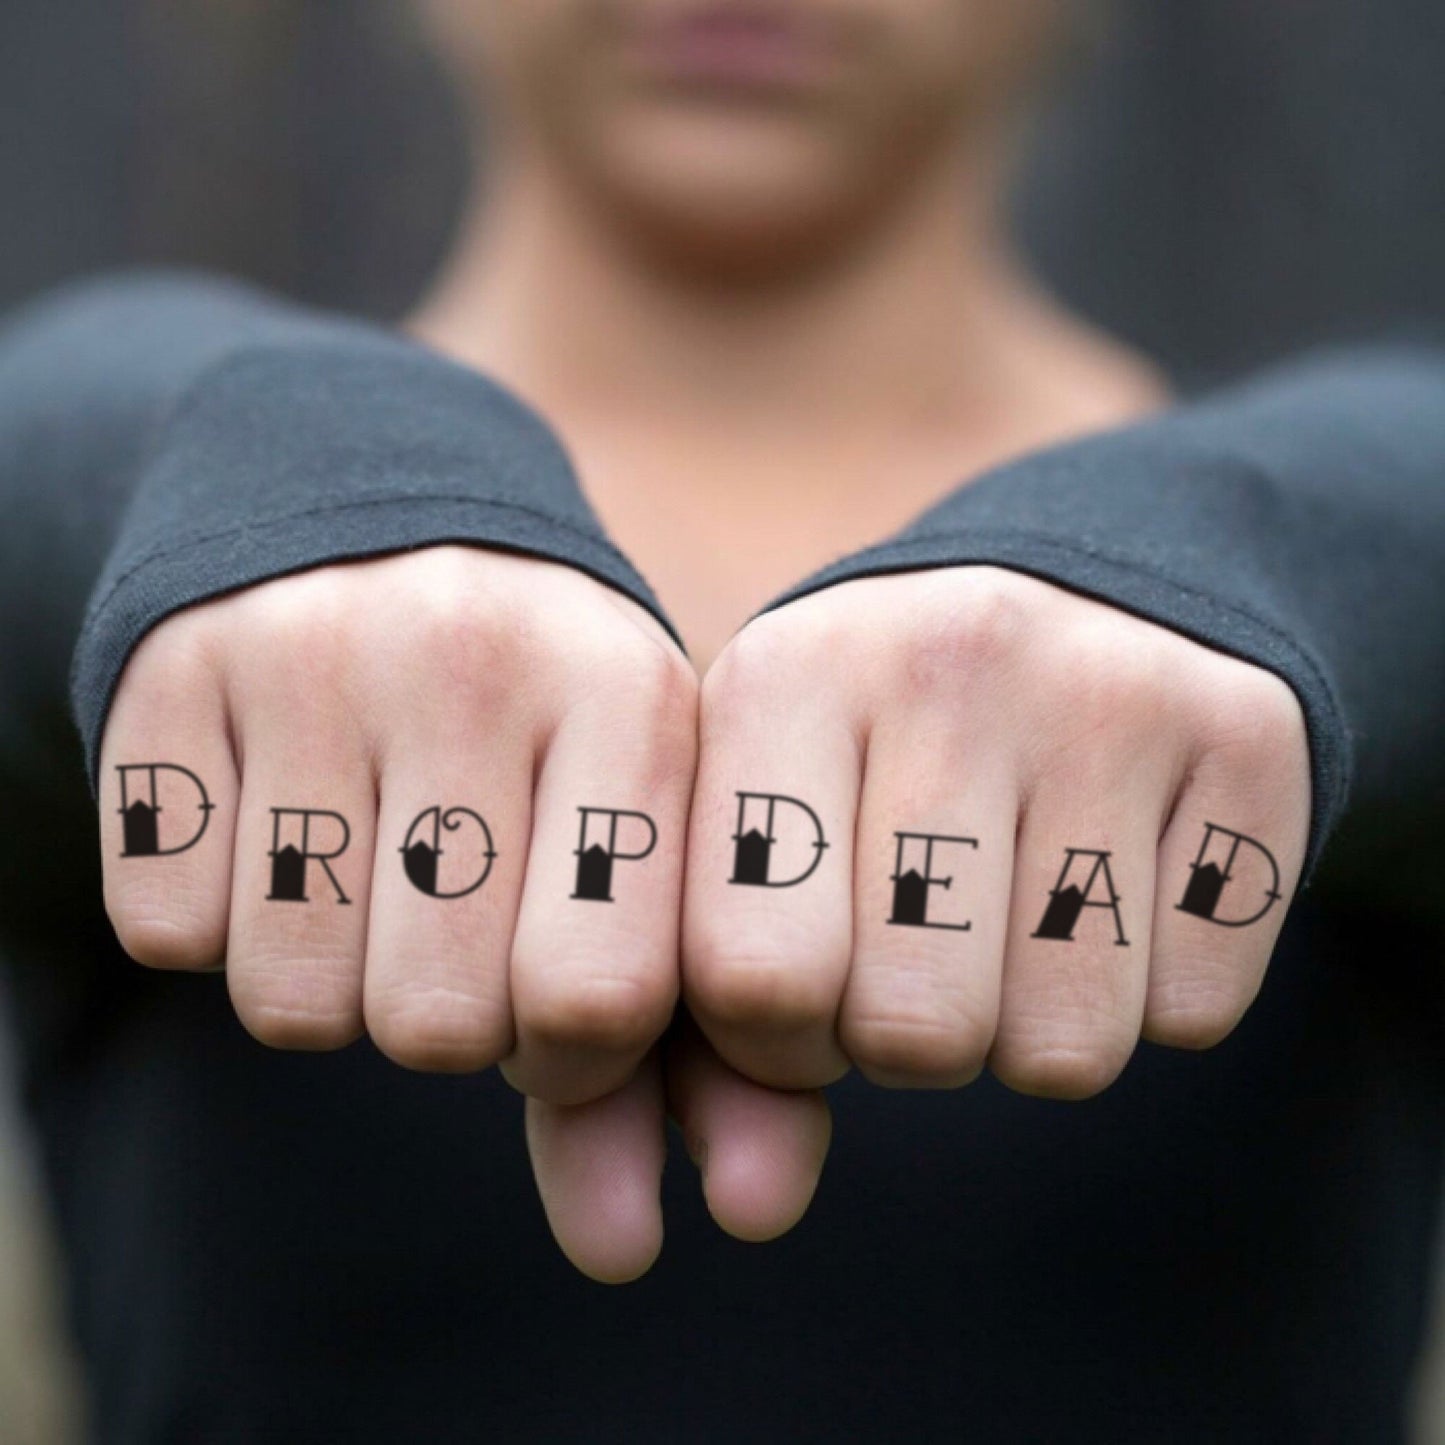 fake small drop dead Lettering temporary tattoo sticker design idea on finger